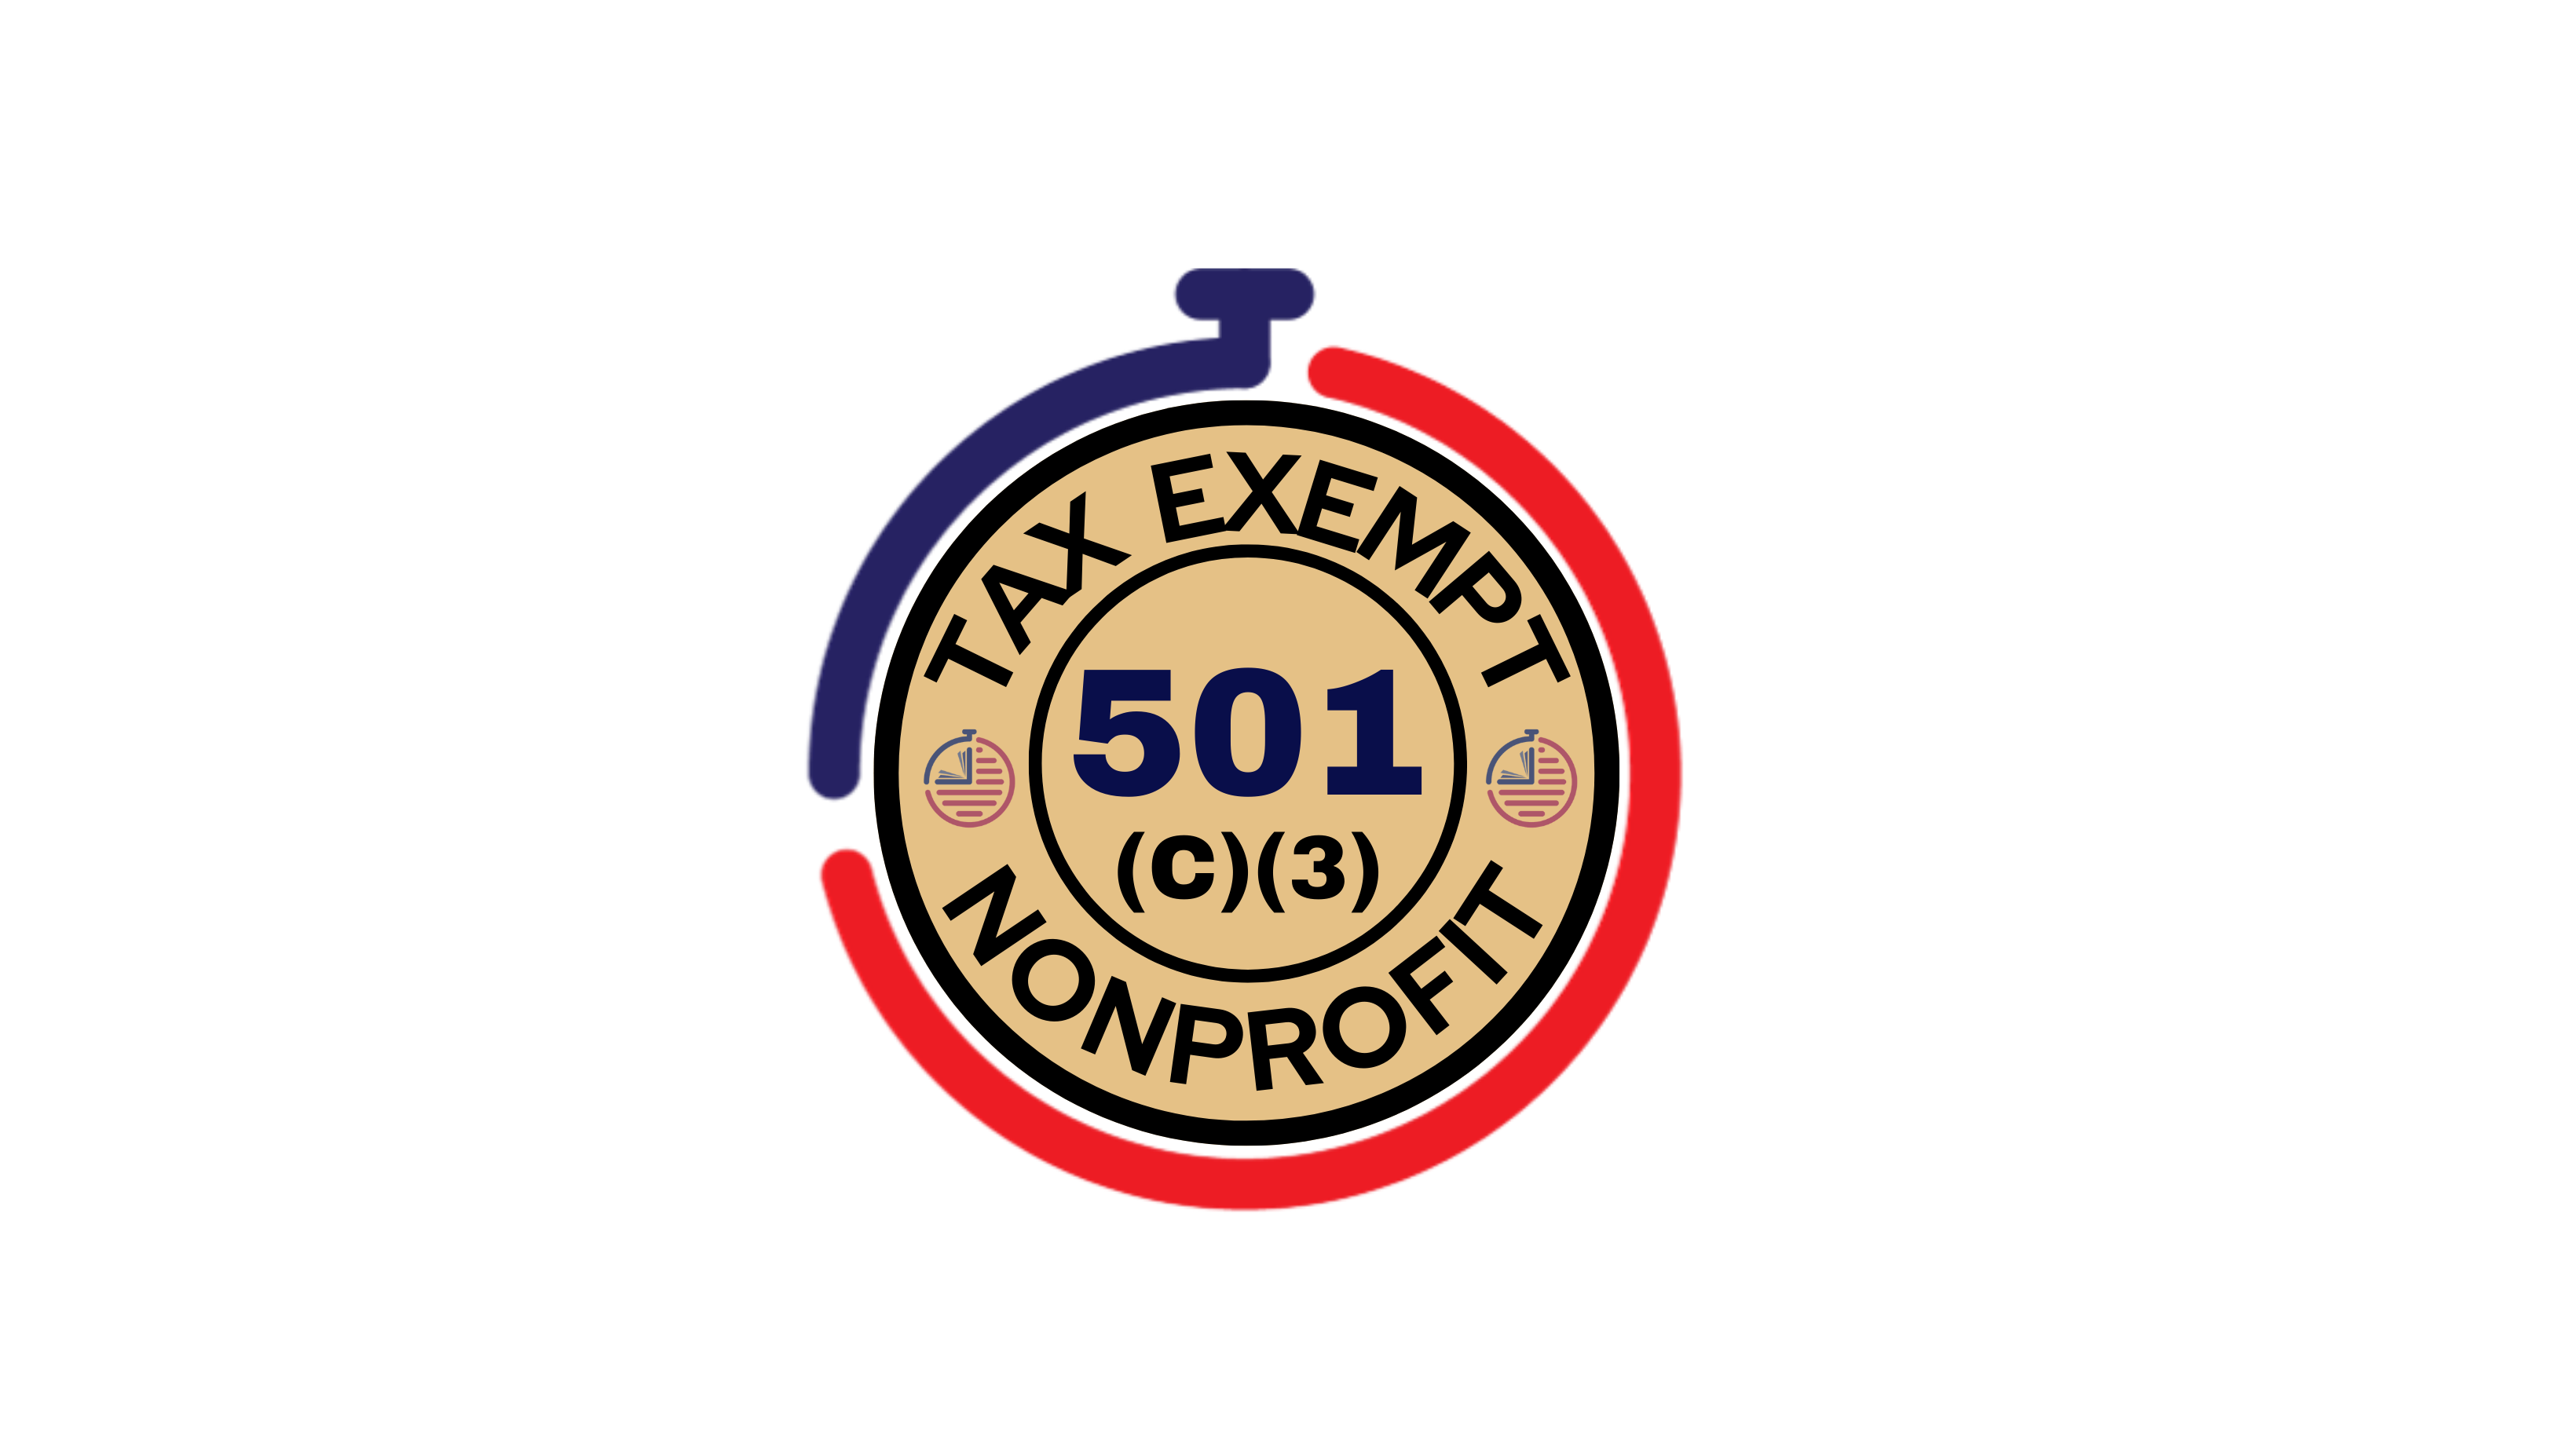 Tax Exempt 501(c)(3) Nonprofit Badge